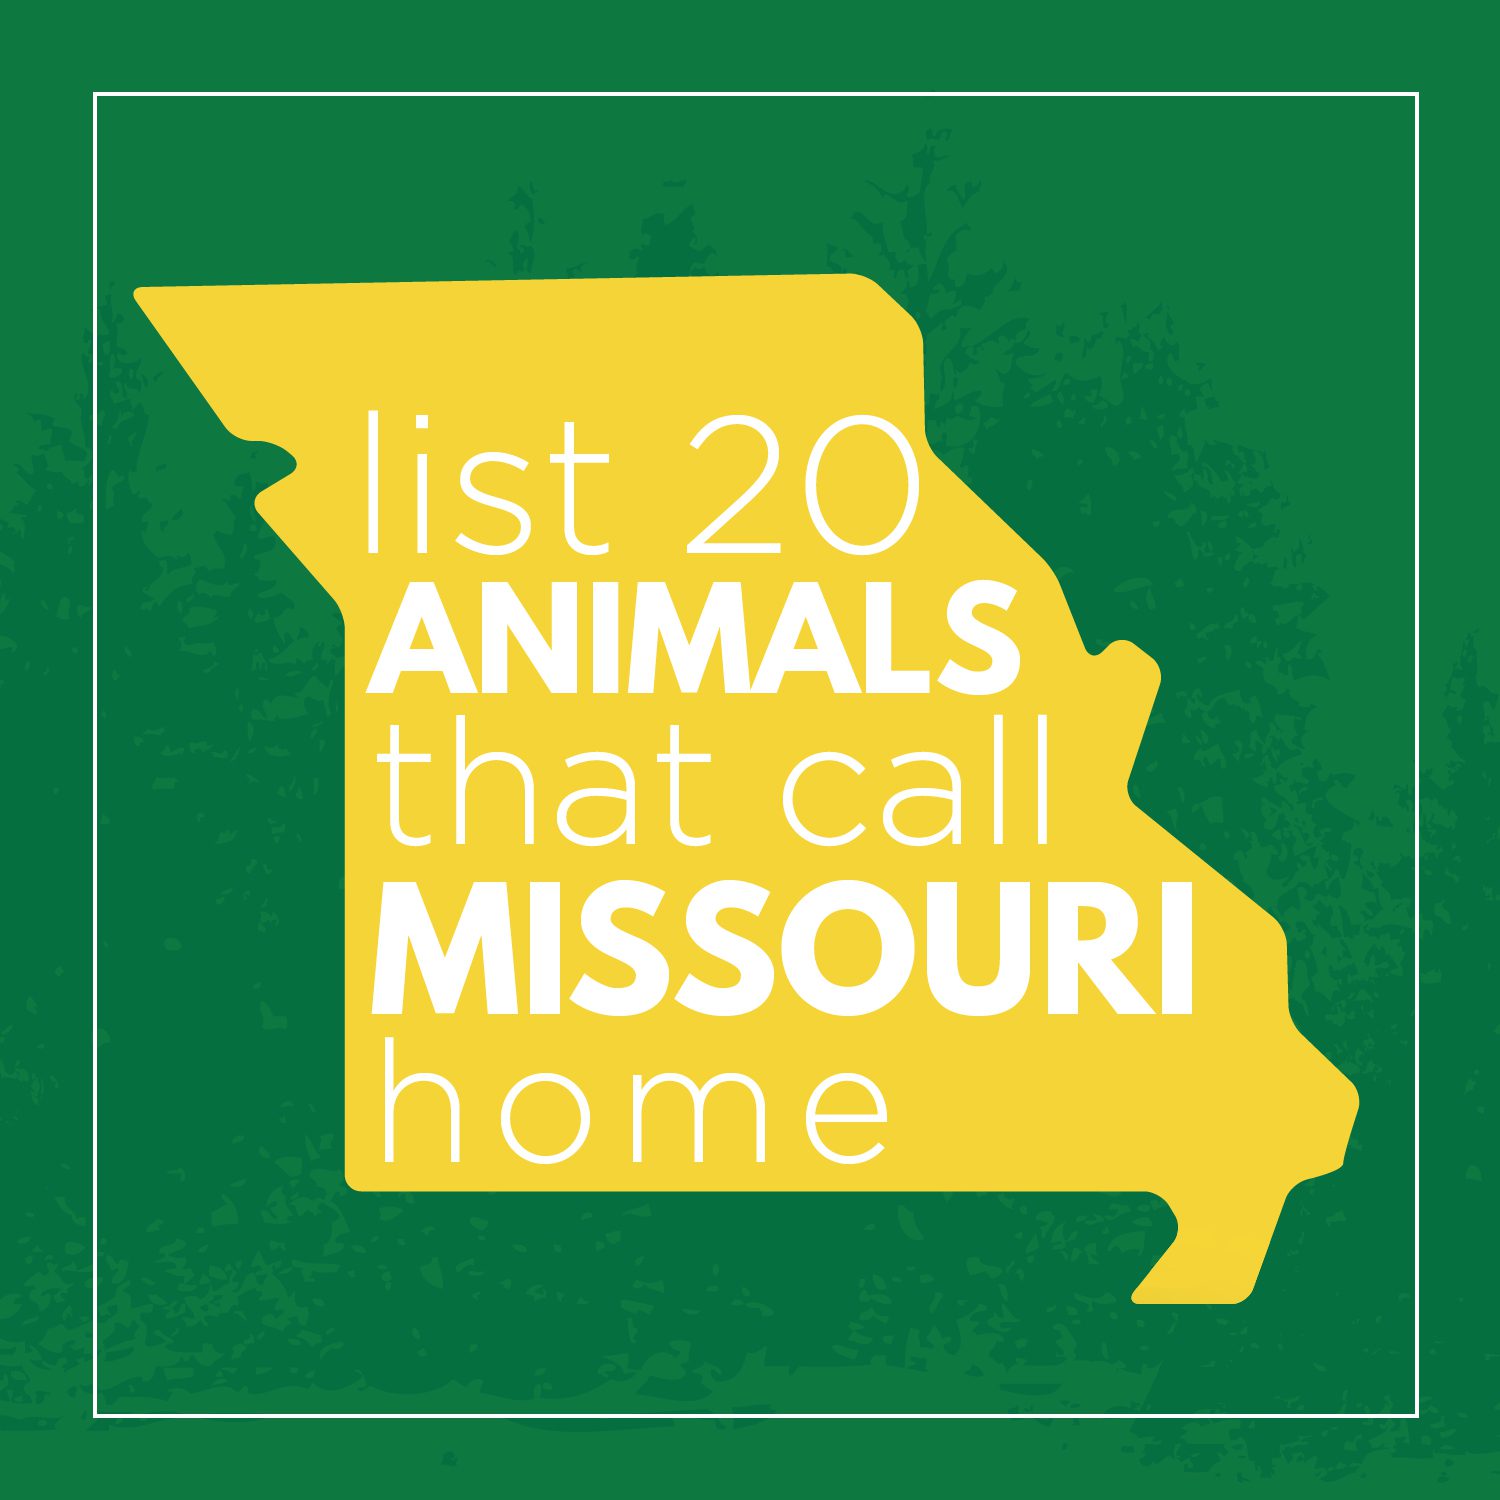 List 20 animals that call Missouri home